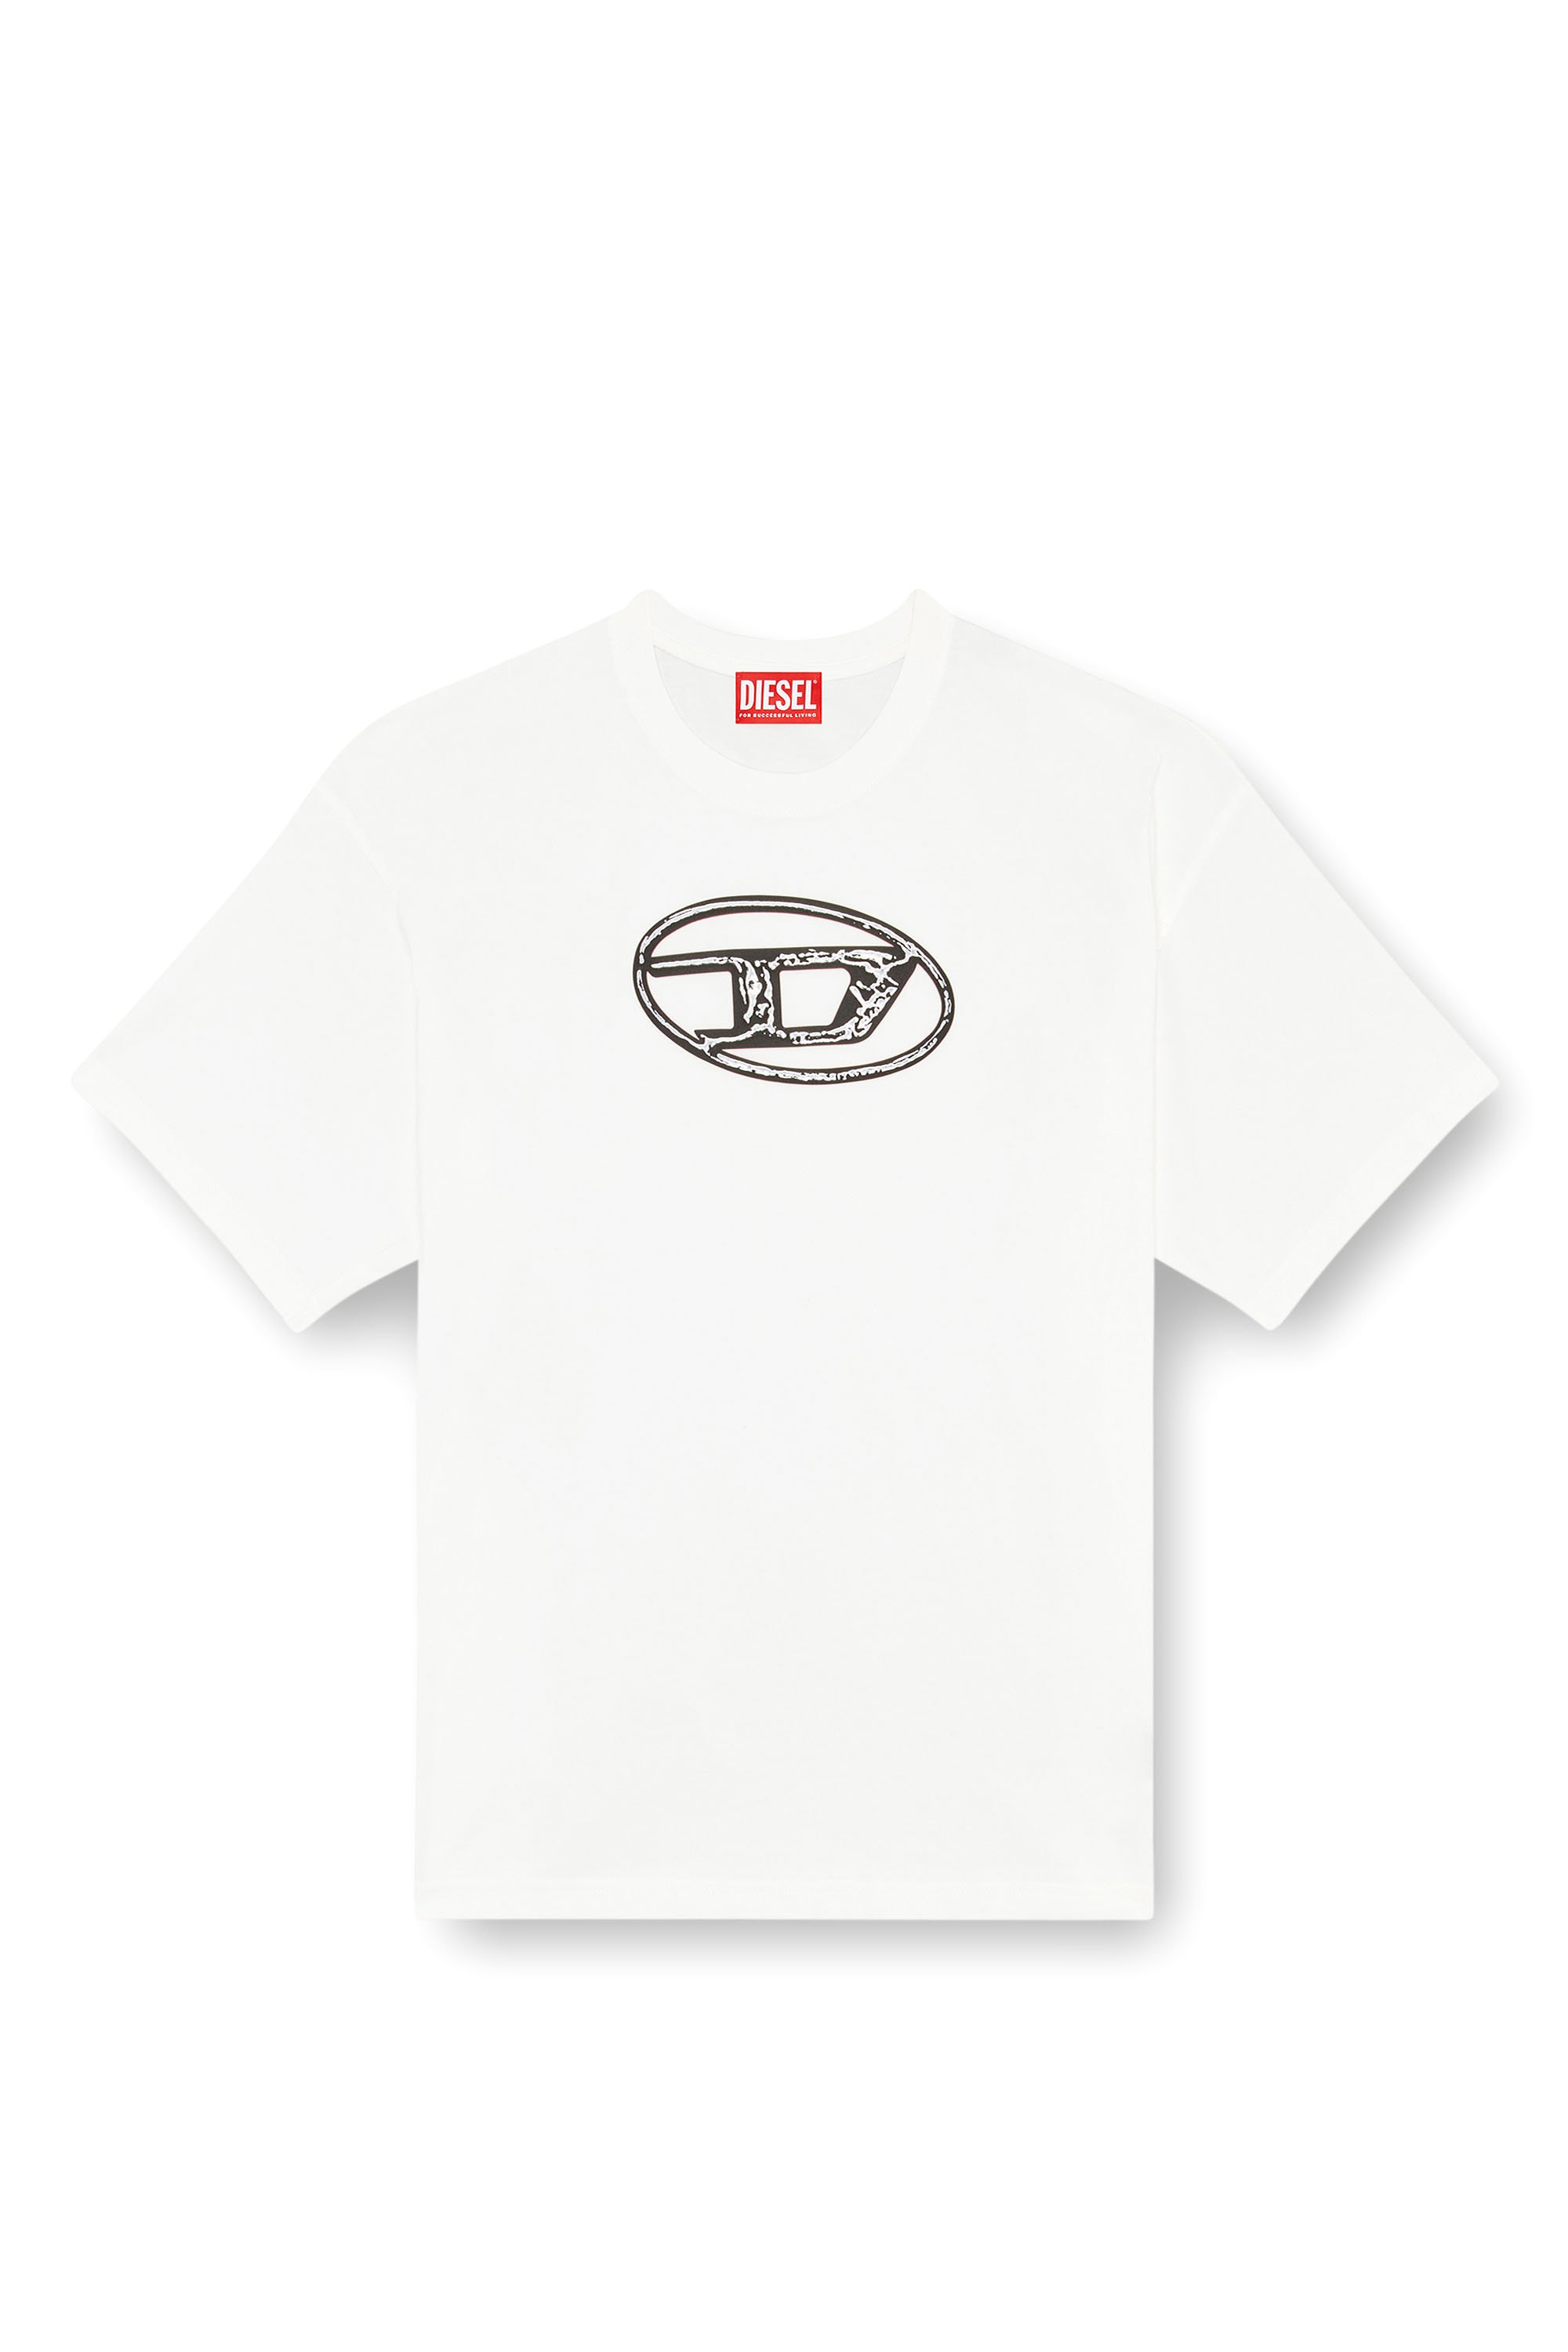 Diesel - T-BOXT-Q22, Herren Verblasstes T-Shirt mit Oval D-Print in Weiss - Image 4